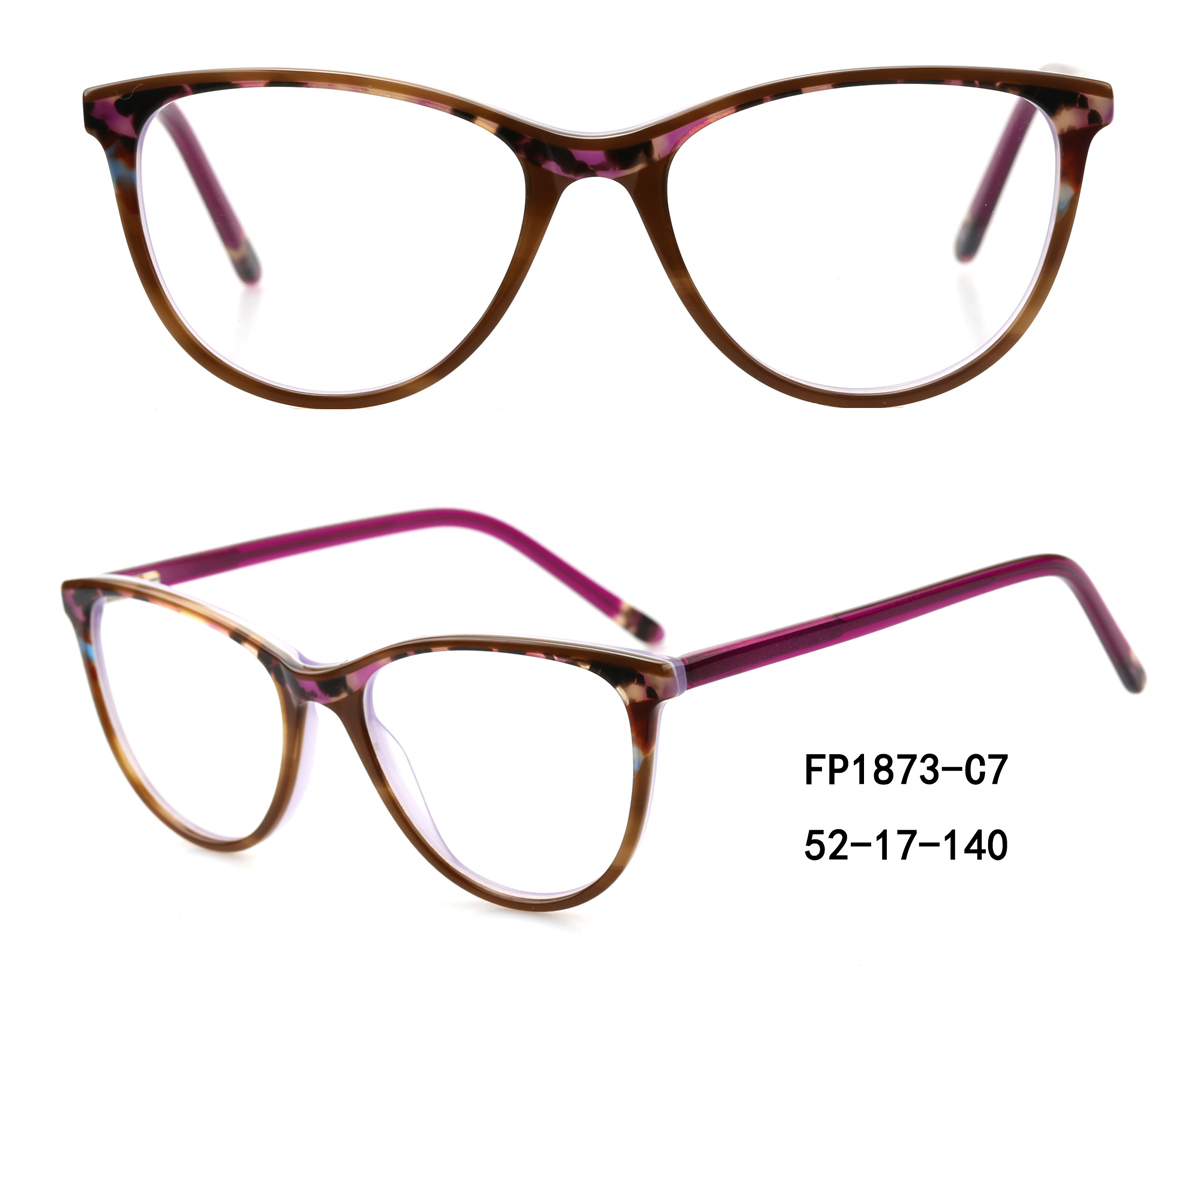 Wooden Prescription Glasses Frame Wholesale,Wood Eyeglass Frame Supplier